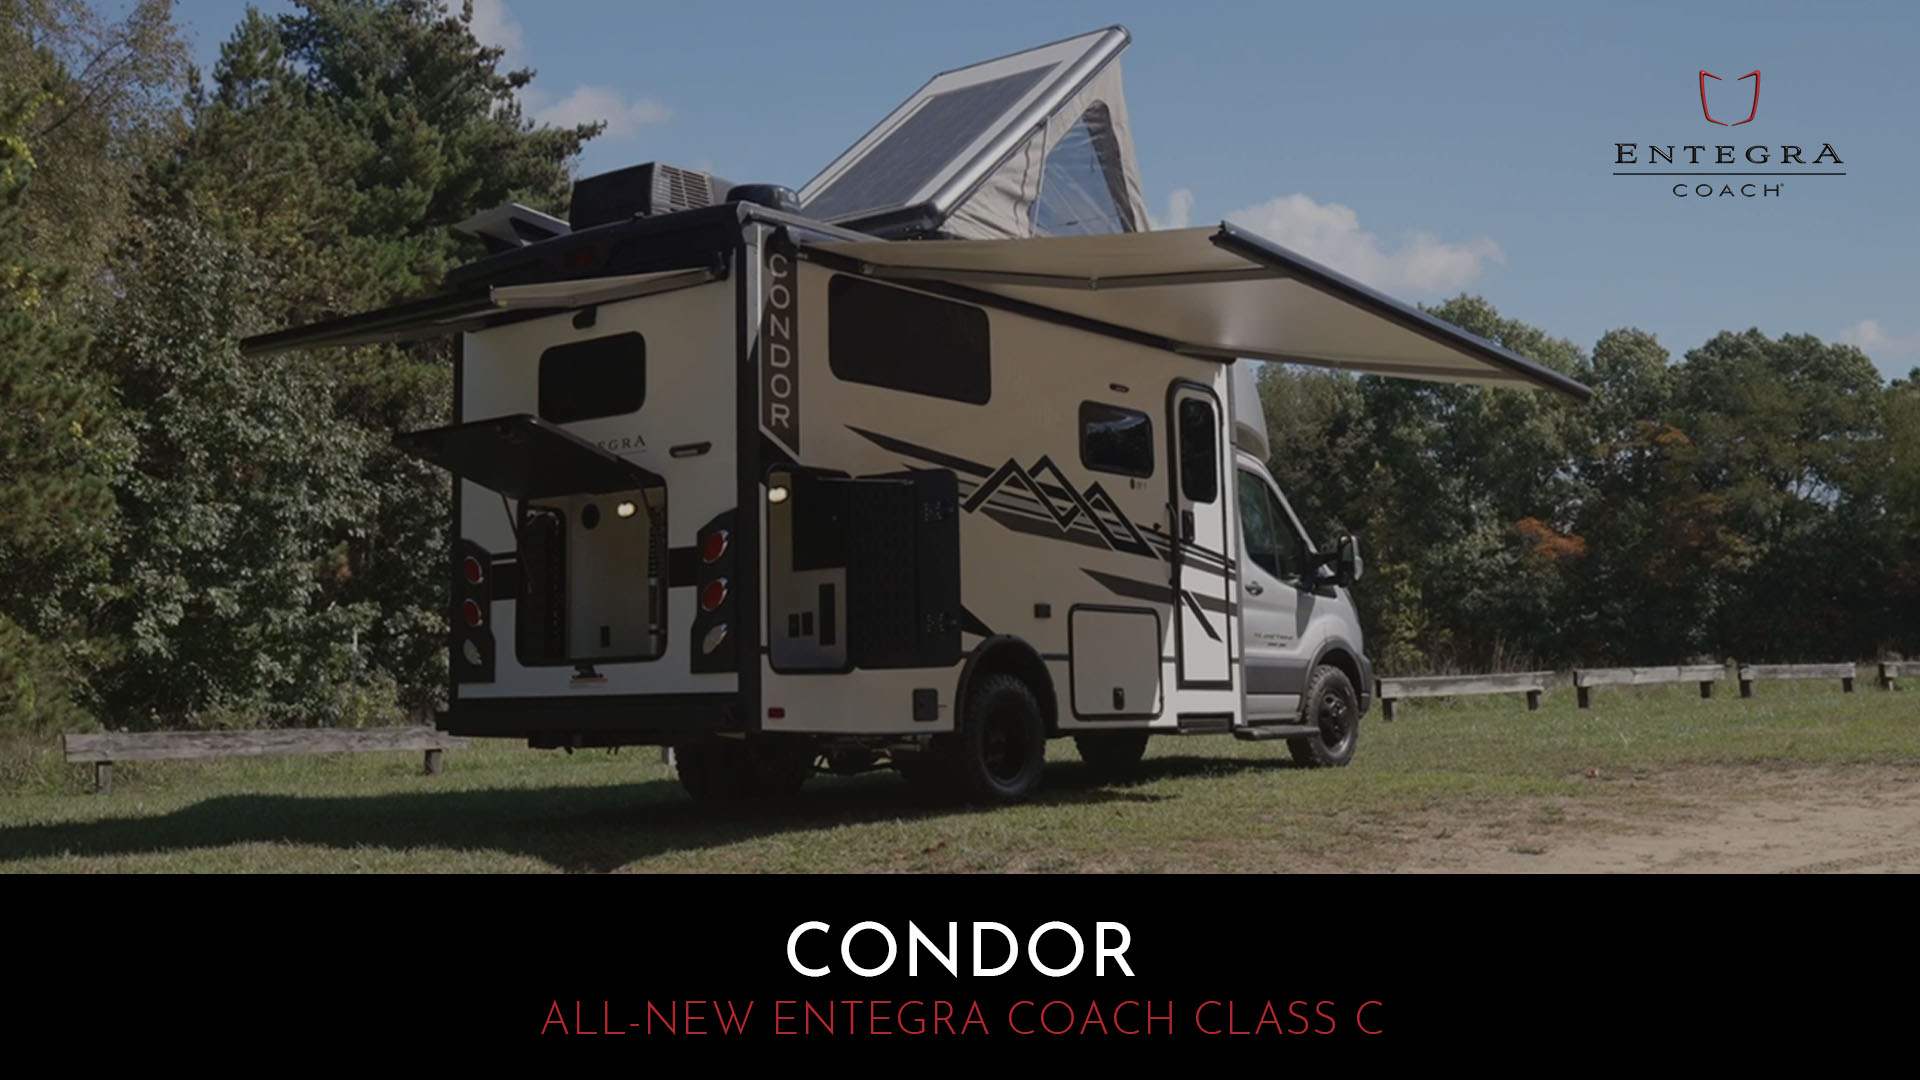 Condor Launch Video